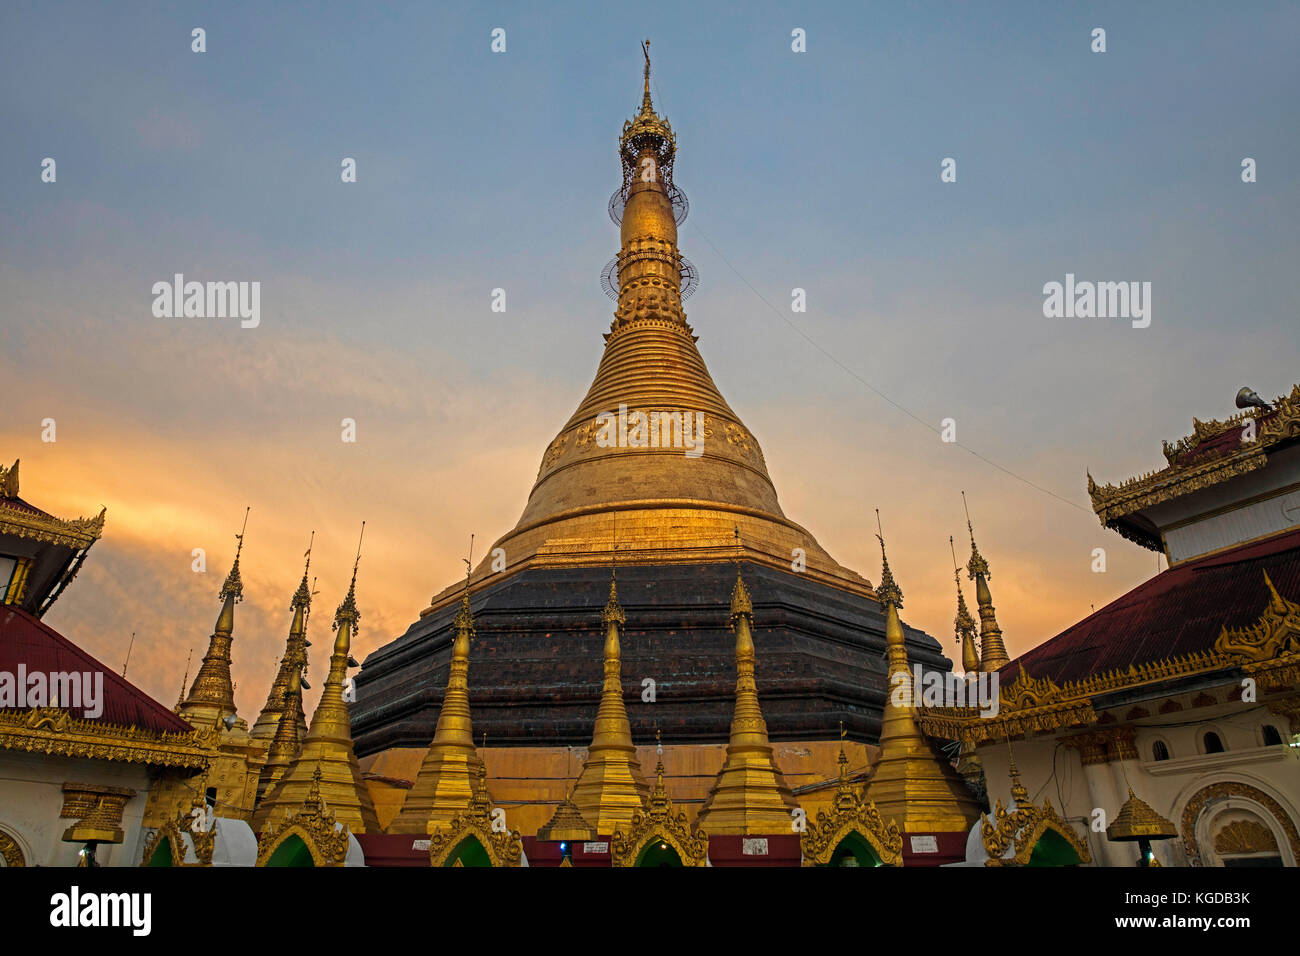 La pagode kyaik de fil / kyaikthanian kyaikthanlan / paya temple et monastère à mawlamyine / mawlamyaing, l'État môn, myanmar / Birmanie Banque D'Images